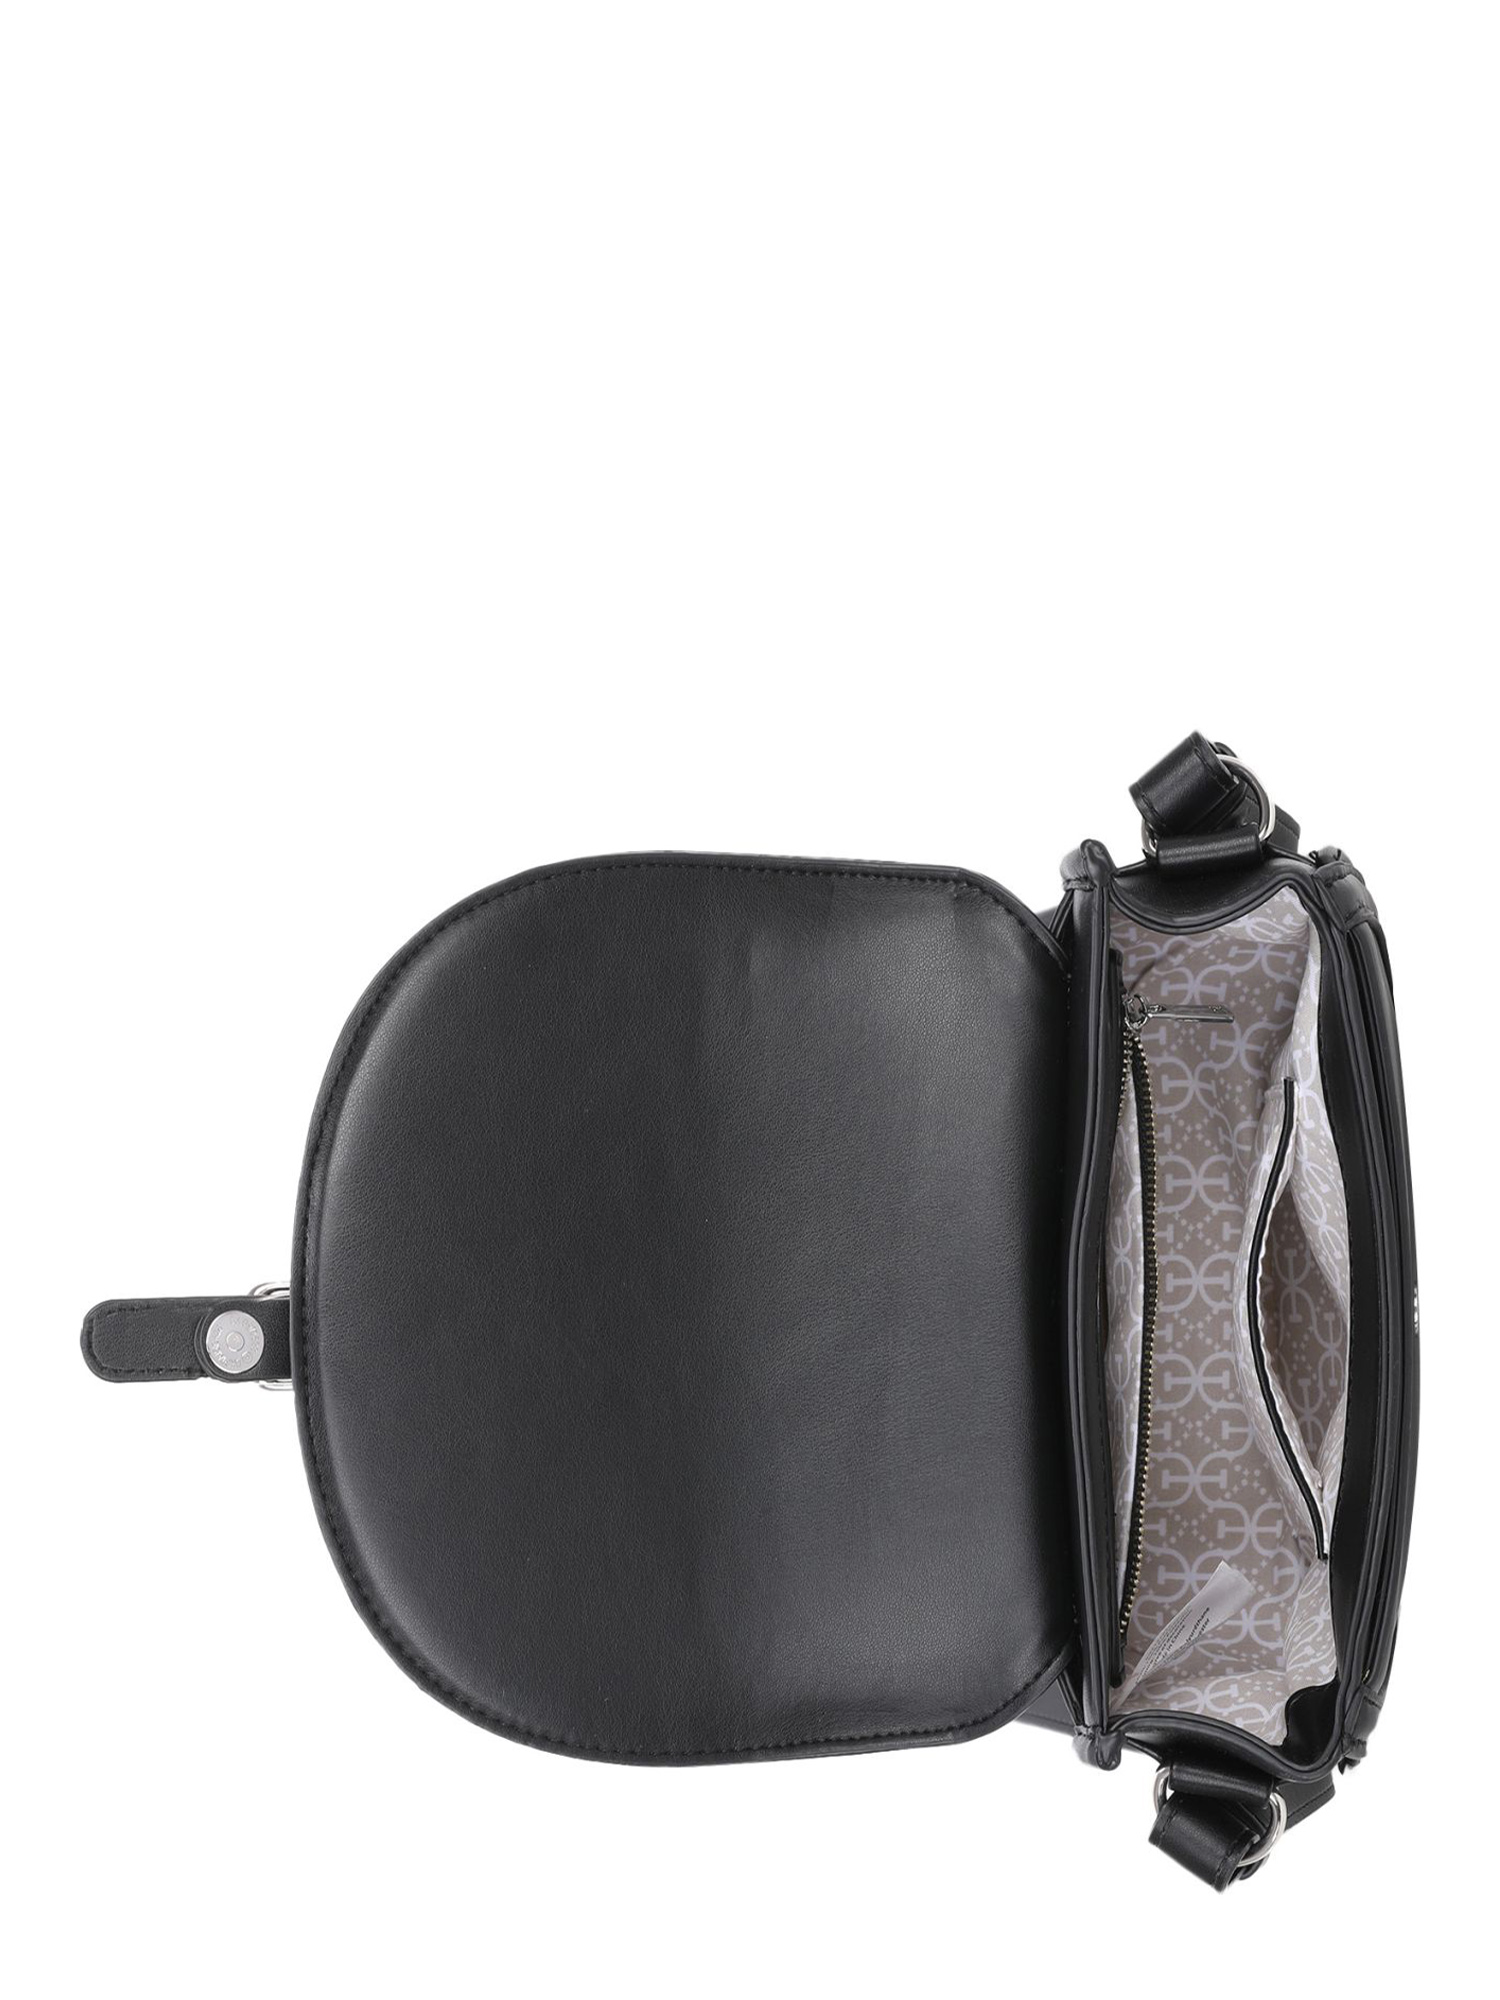 Sam Edelman Women's Giorgia Saddle Handbag, Black - image 4 of 6